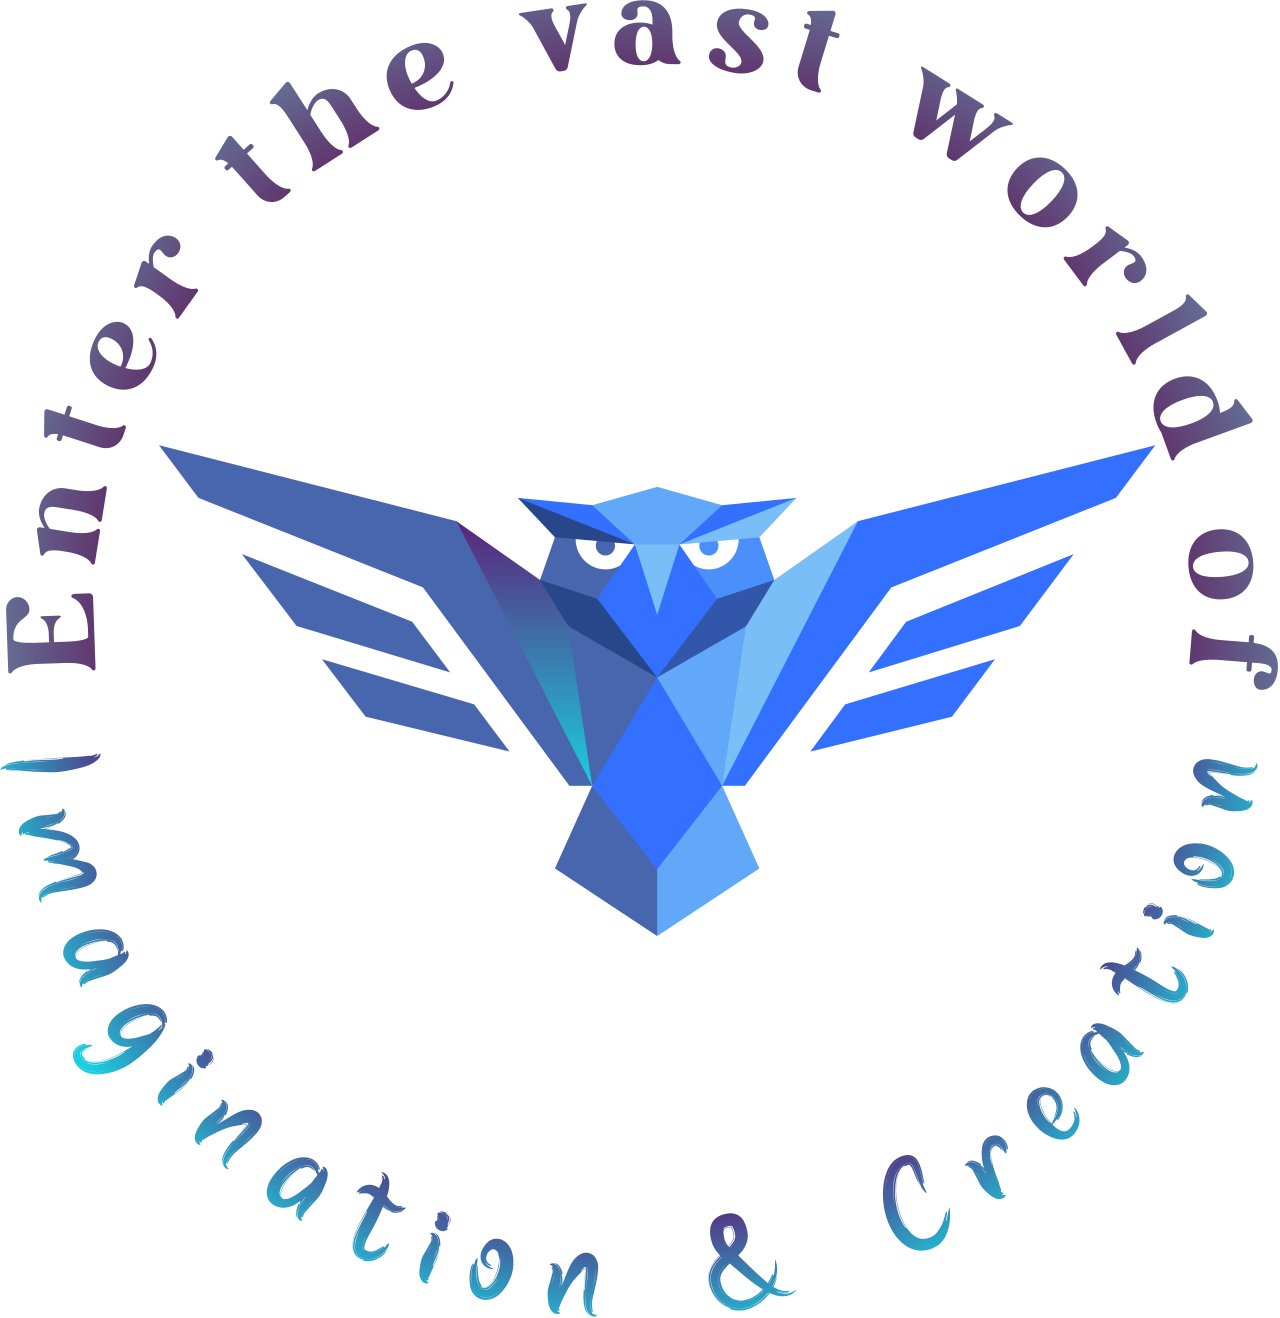 Imagination & Creation's logo